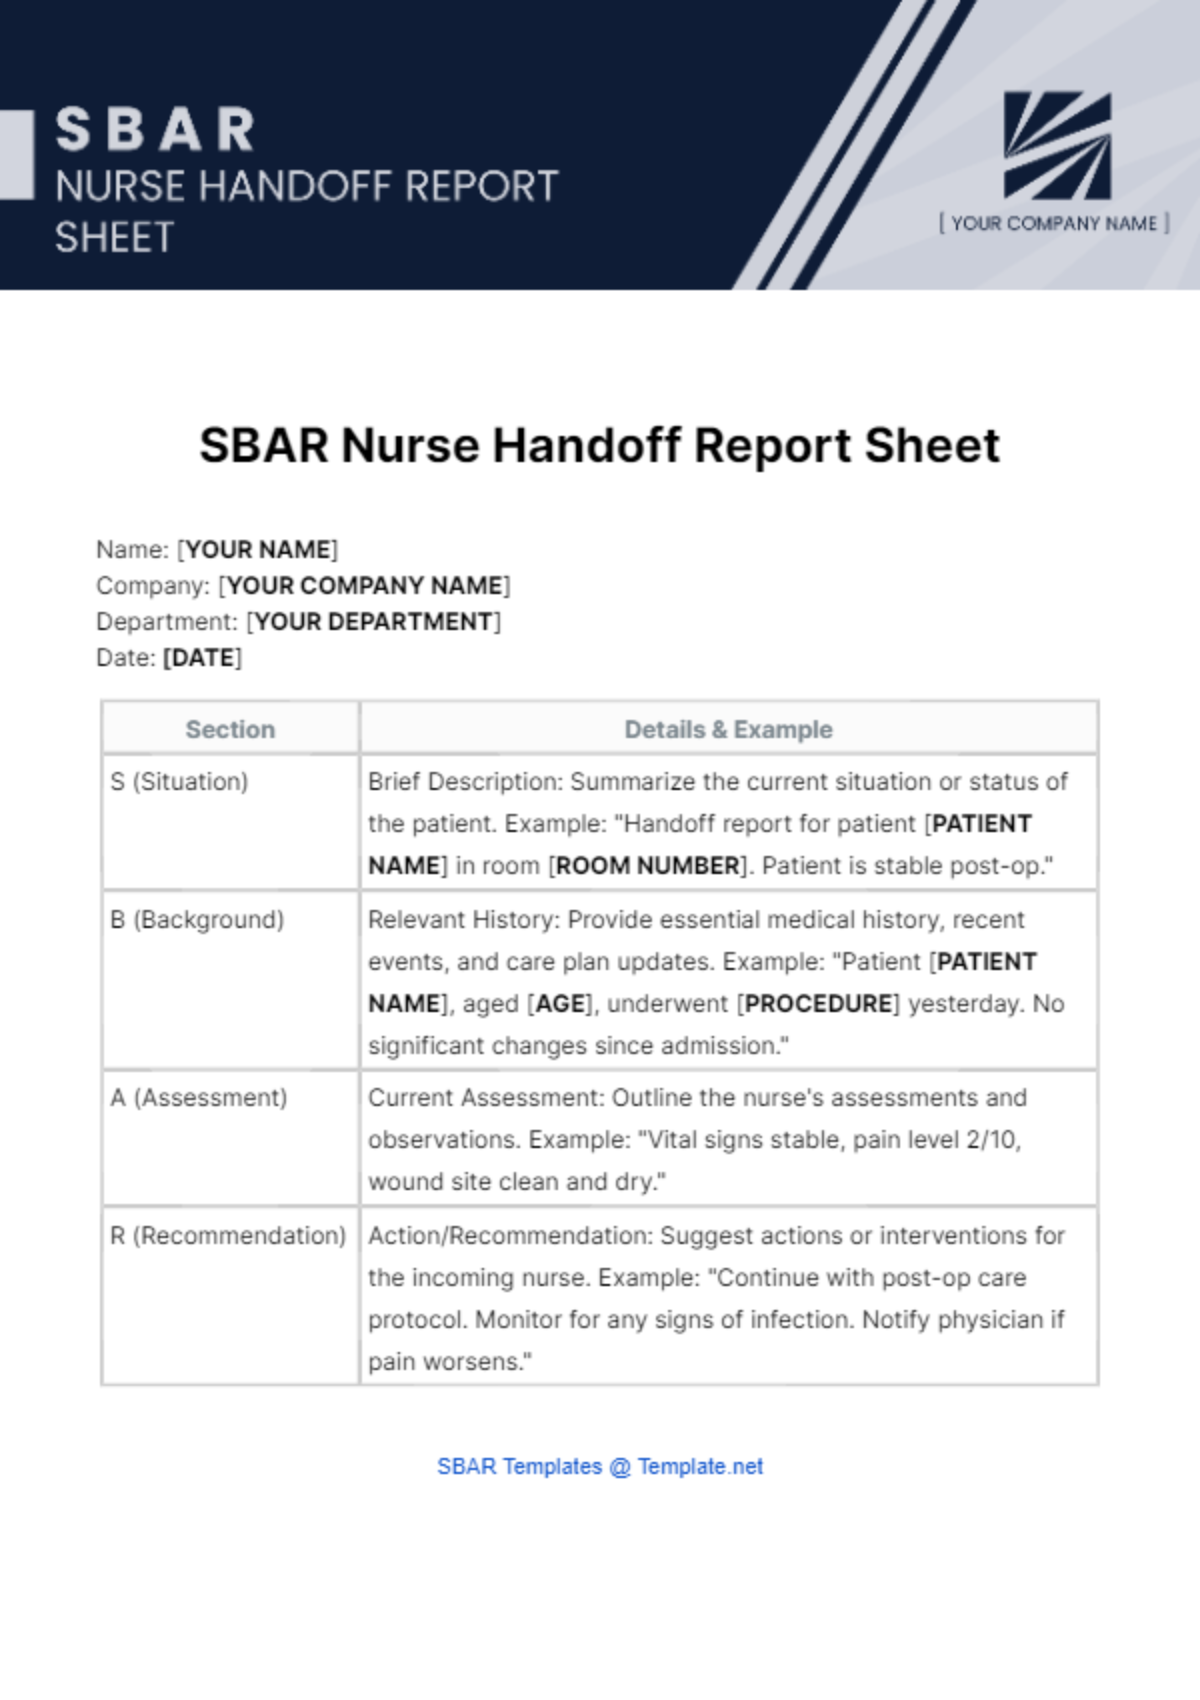 Free SBAR Nurse Handoff Report Sheet Template